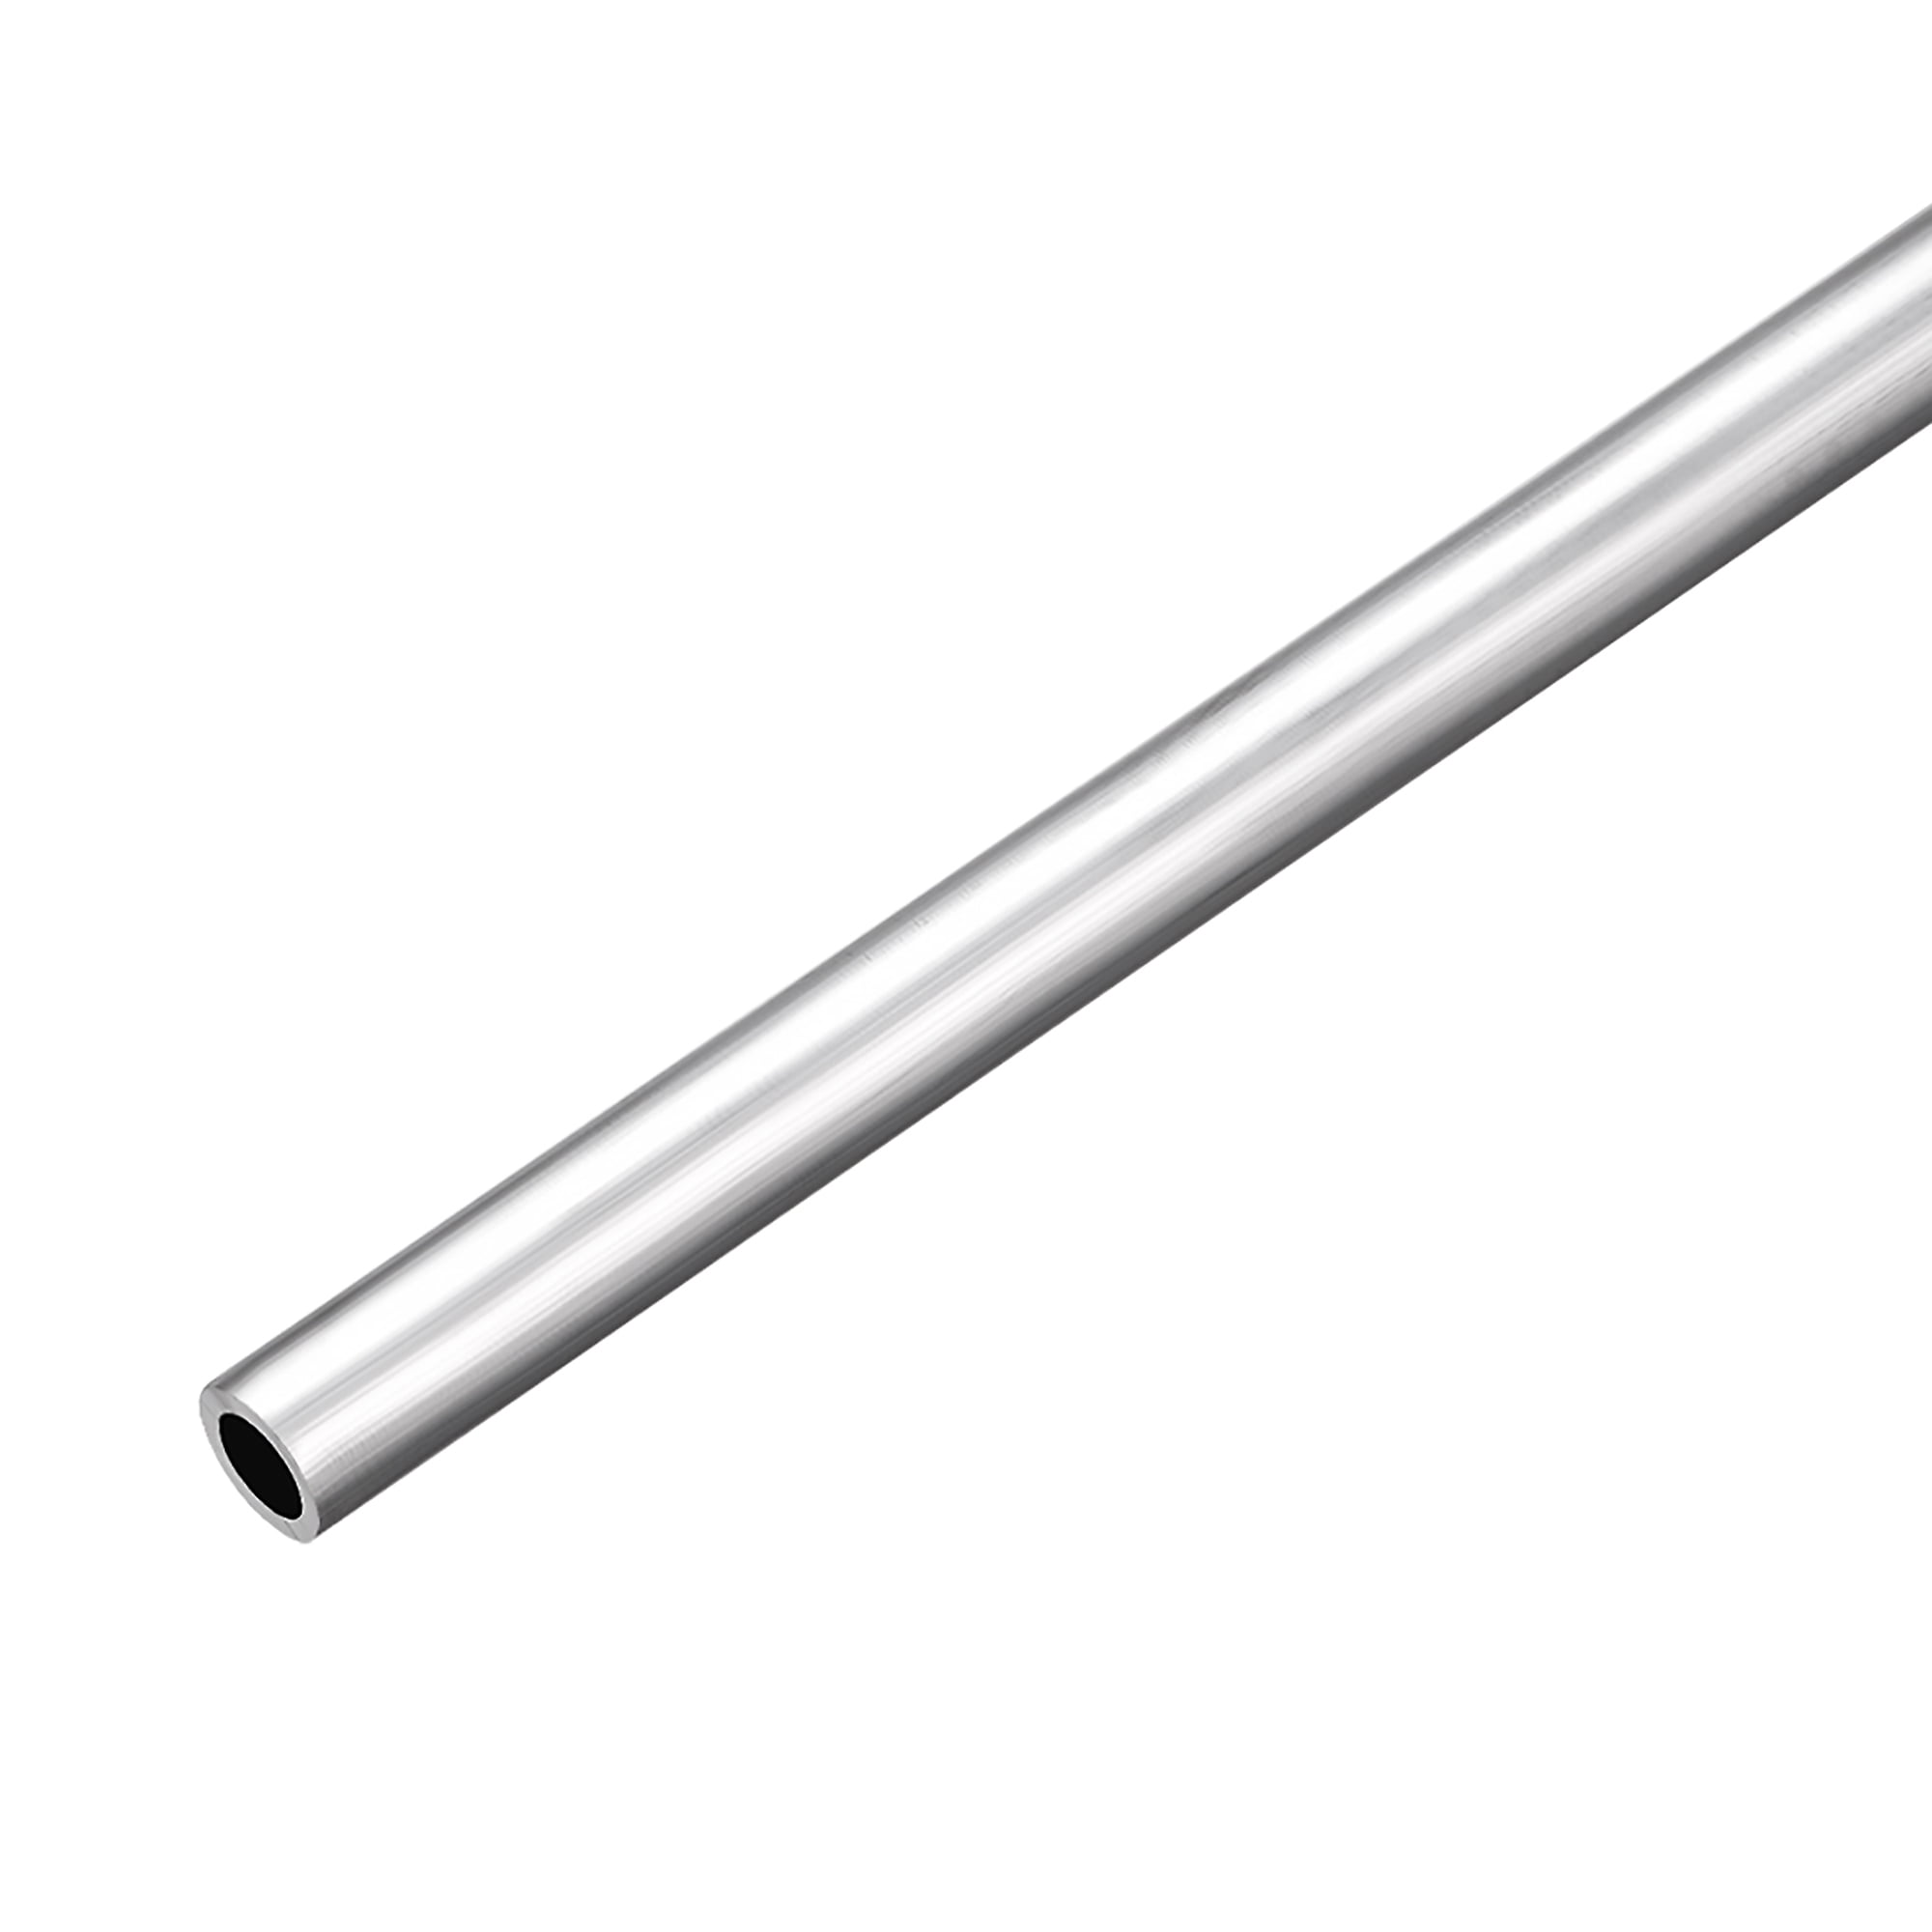 6063 Aluminum Round Tube 300mm Length 18mm OD 12mm Inner Dia Seamless Aluminum Straight Tubing 2 Pcs